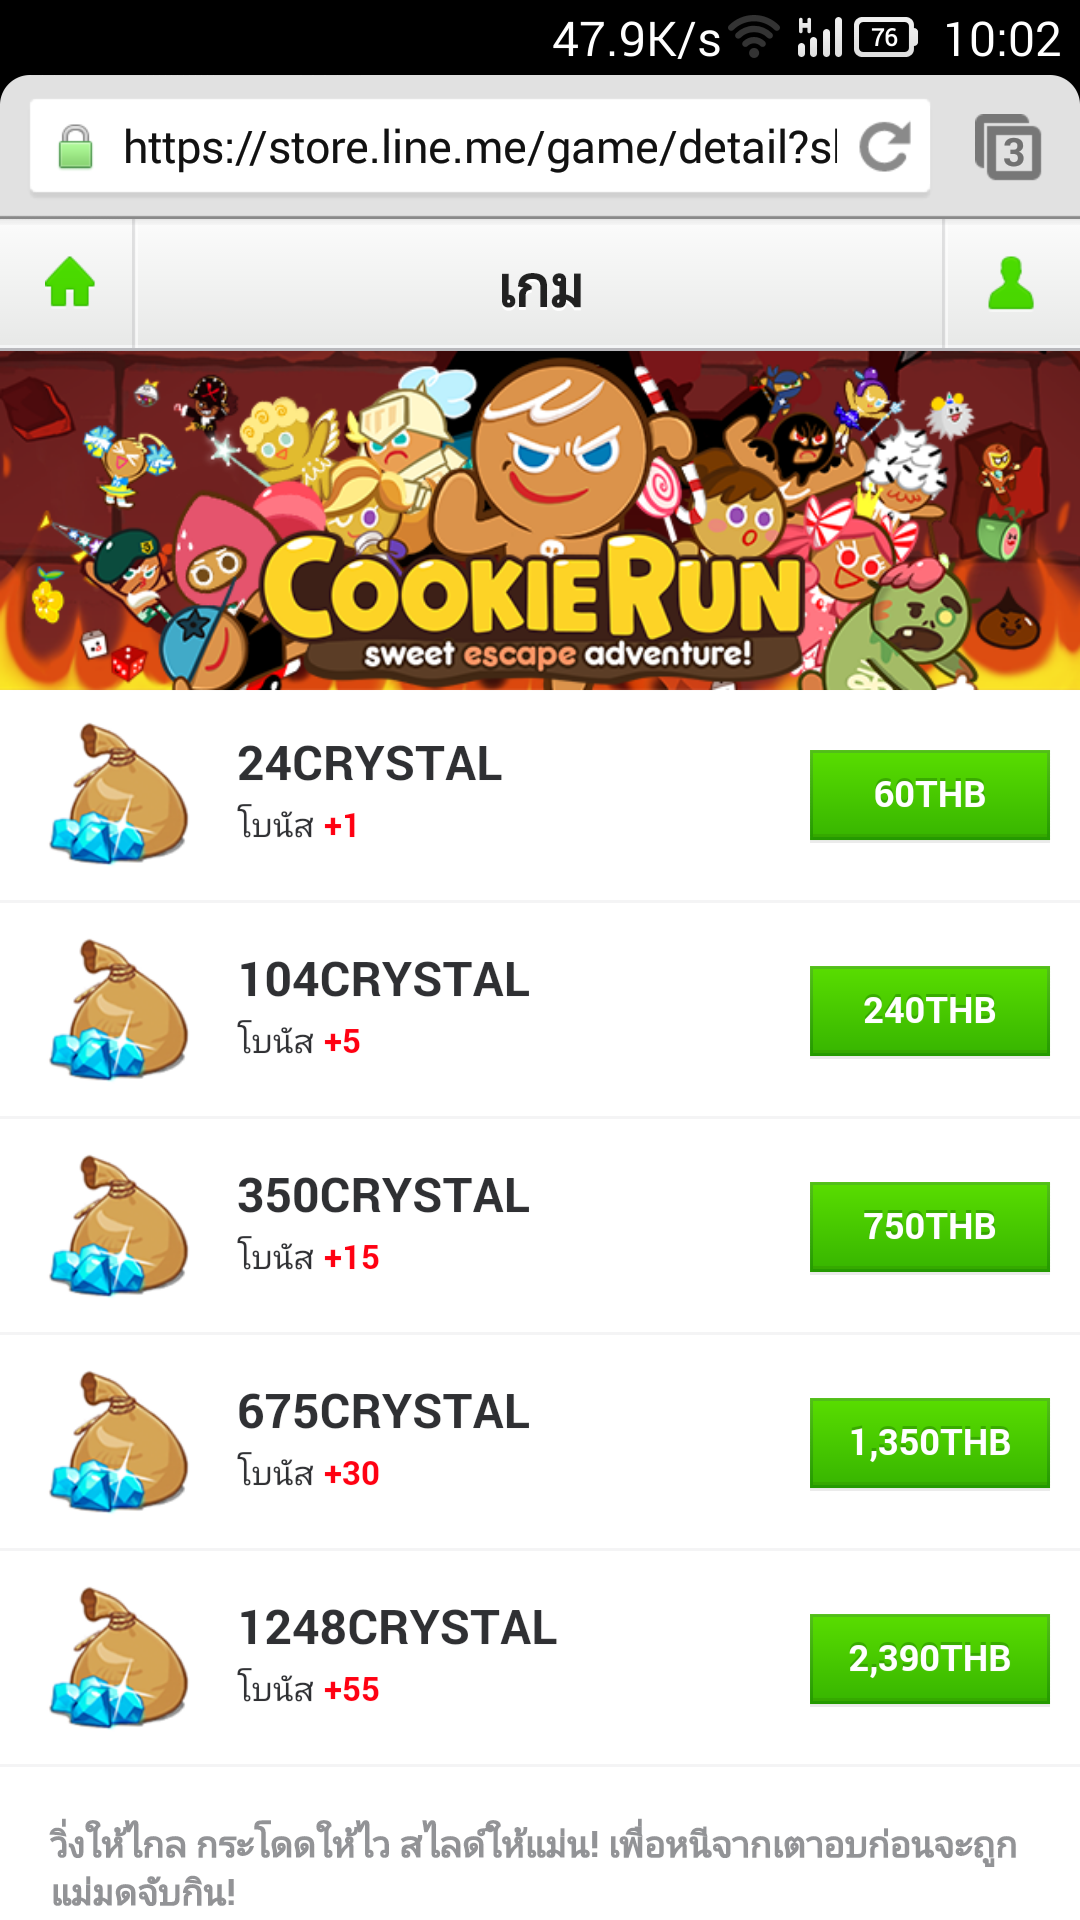 Screenshot 2014 04 15 10 02 28 | cookieRun | สามวันเท่านั้น 15-17 สงกรานต์นี้ เติมเงิน CookieRun และเกมอื่นๆ ผ่านทาง Line web store ทั้งลดทั้งแถมฟรีให้อีก 30%